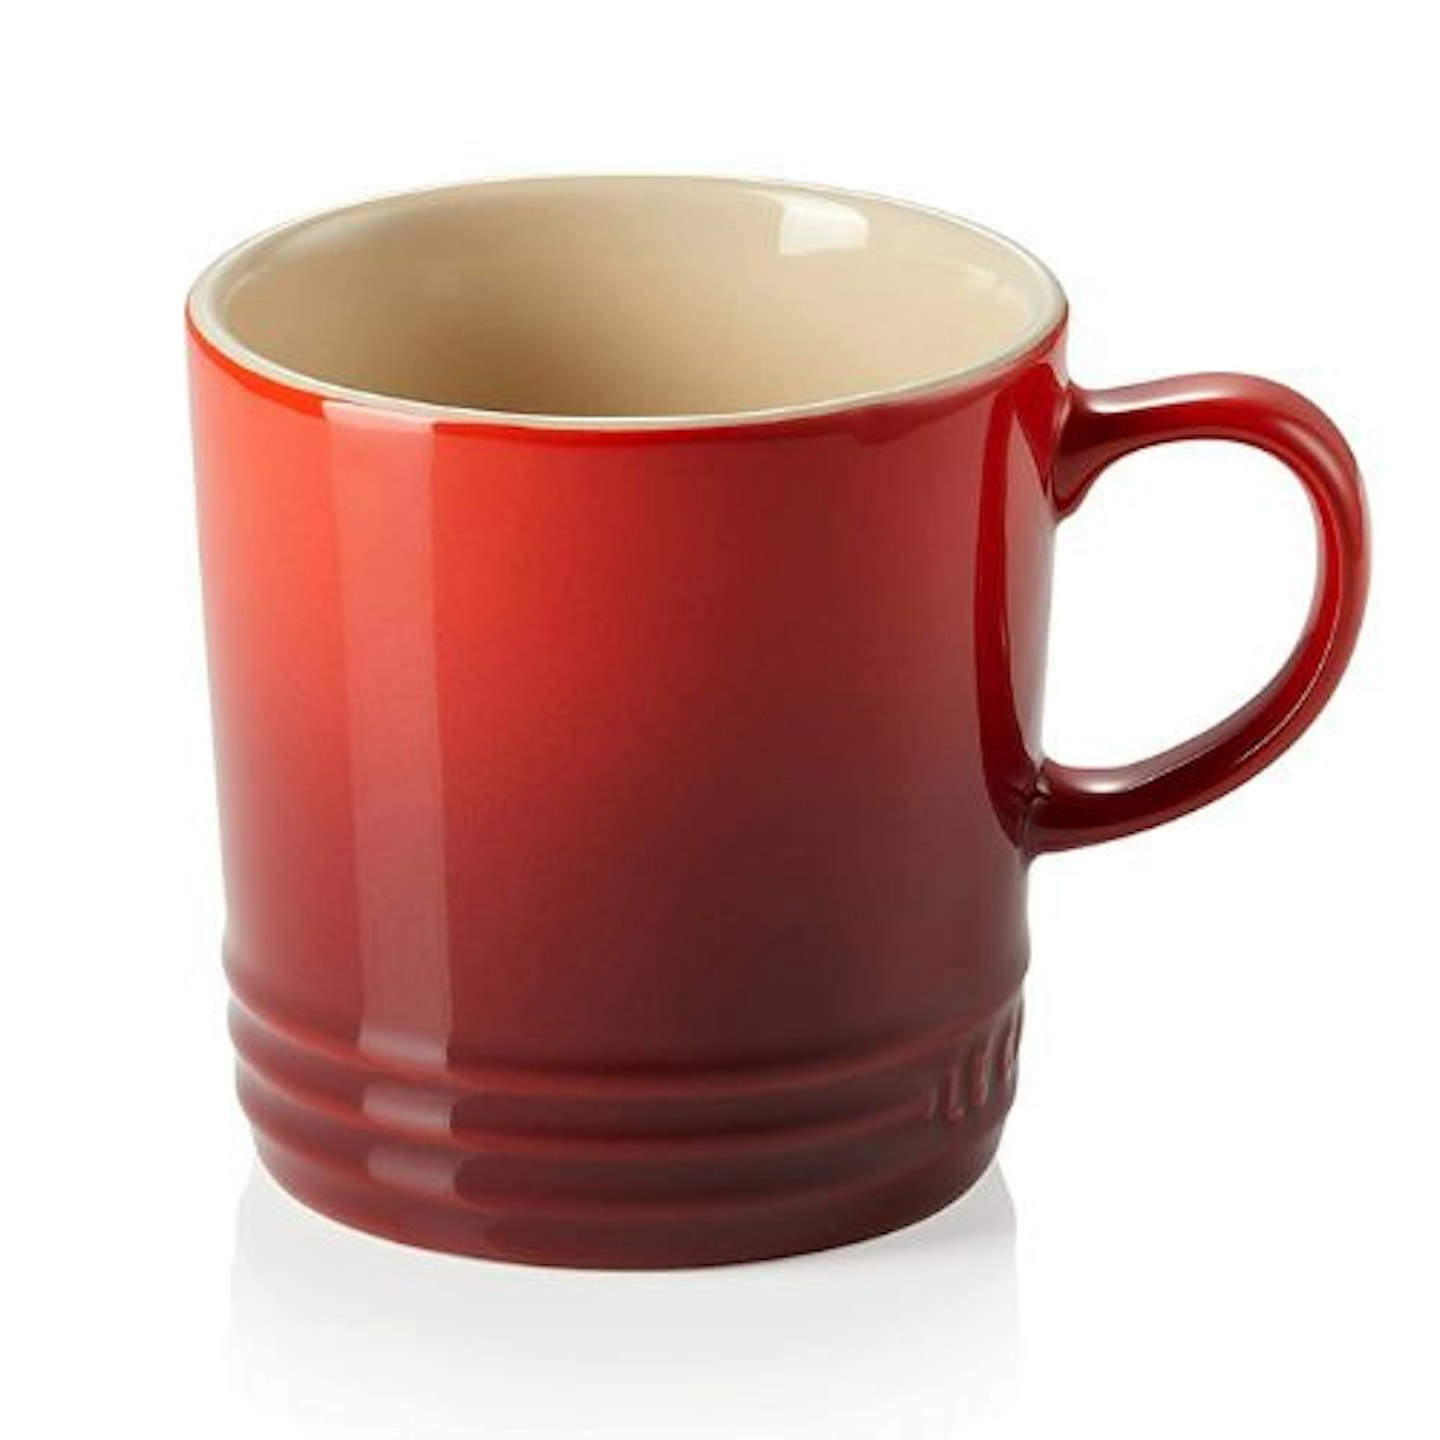 Le Creuset Stoneware Coffee Mug